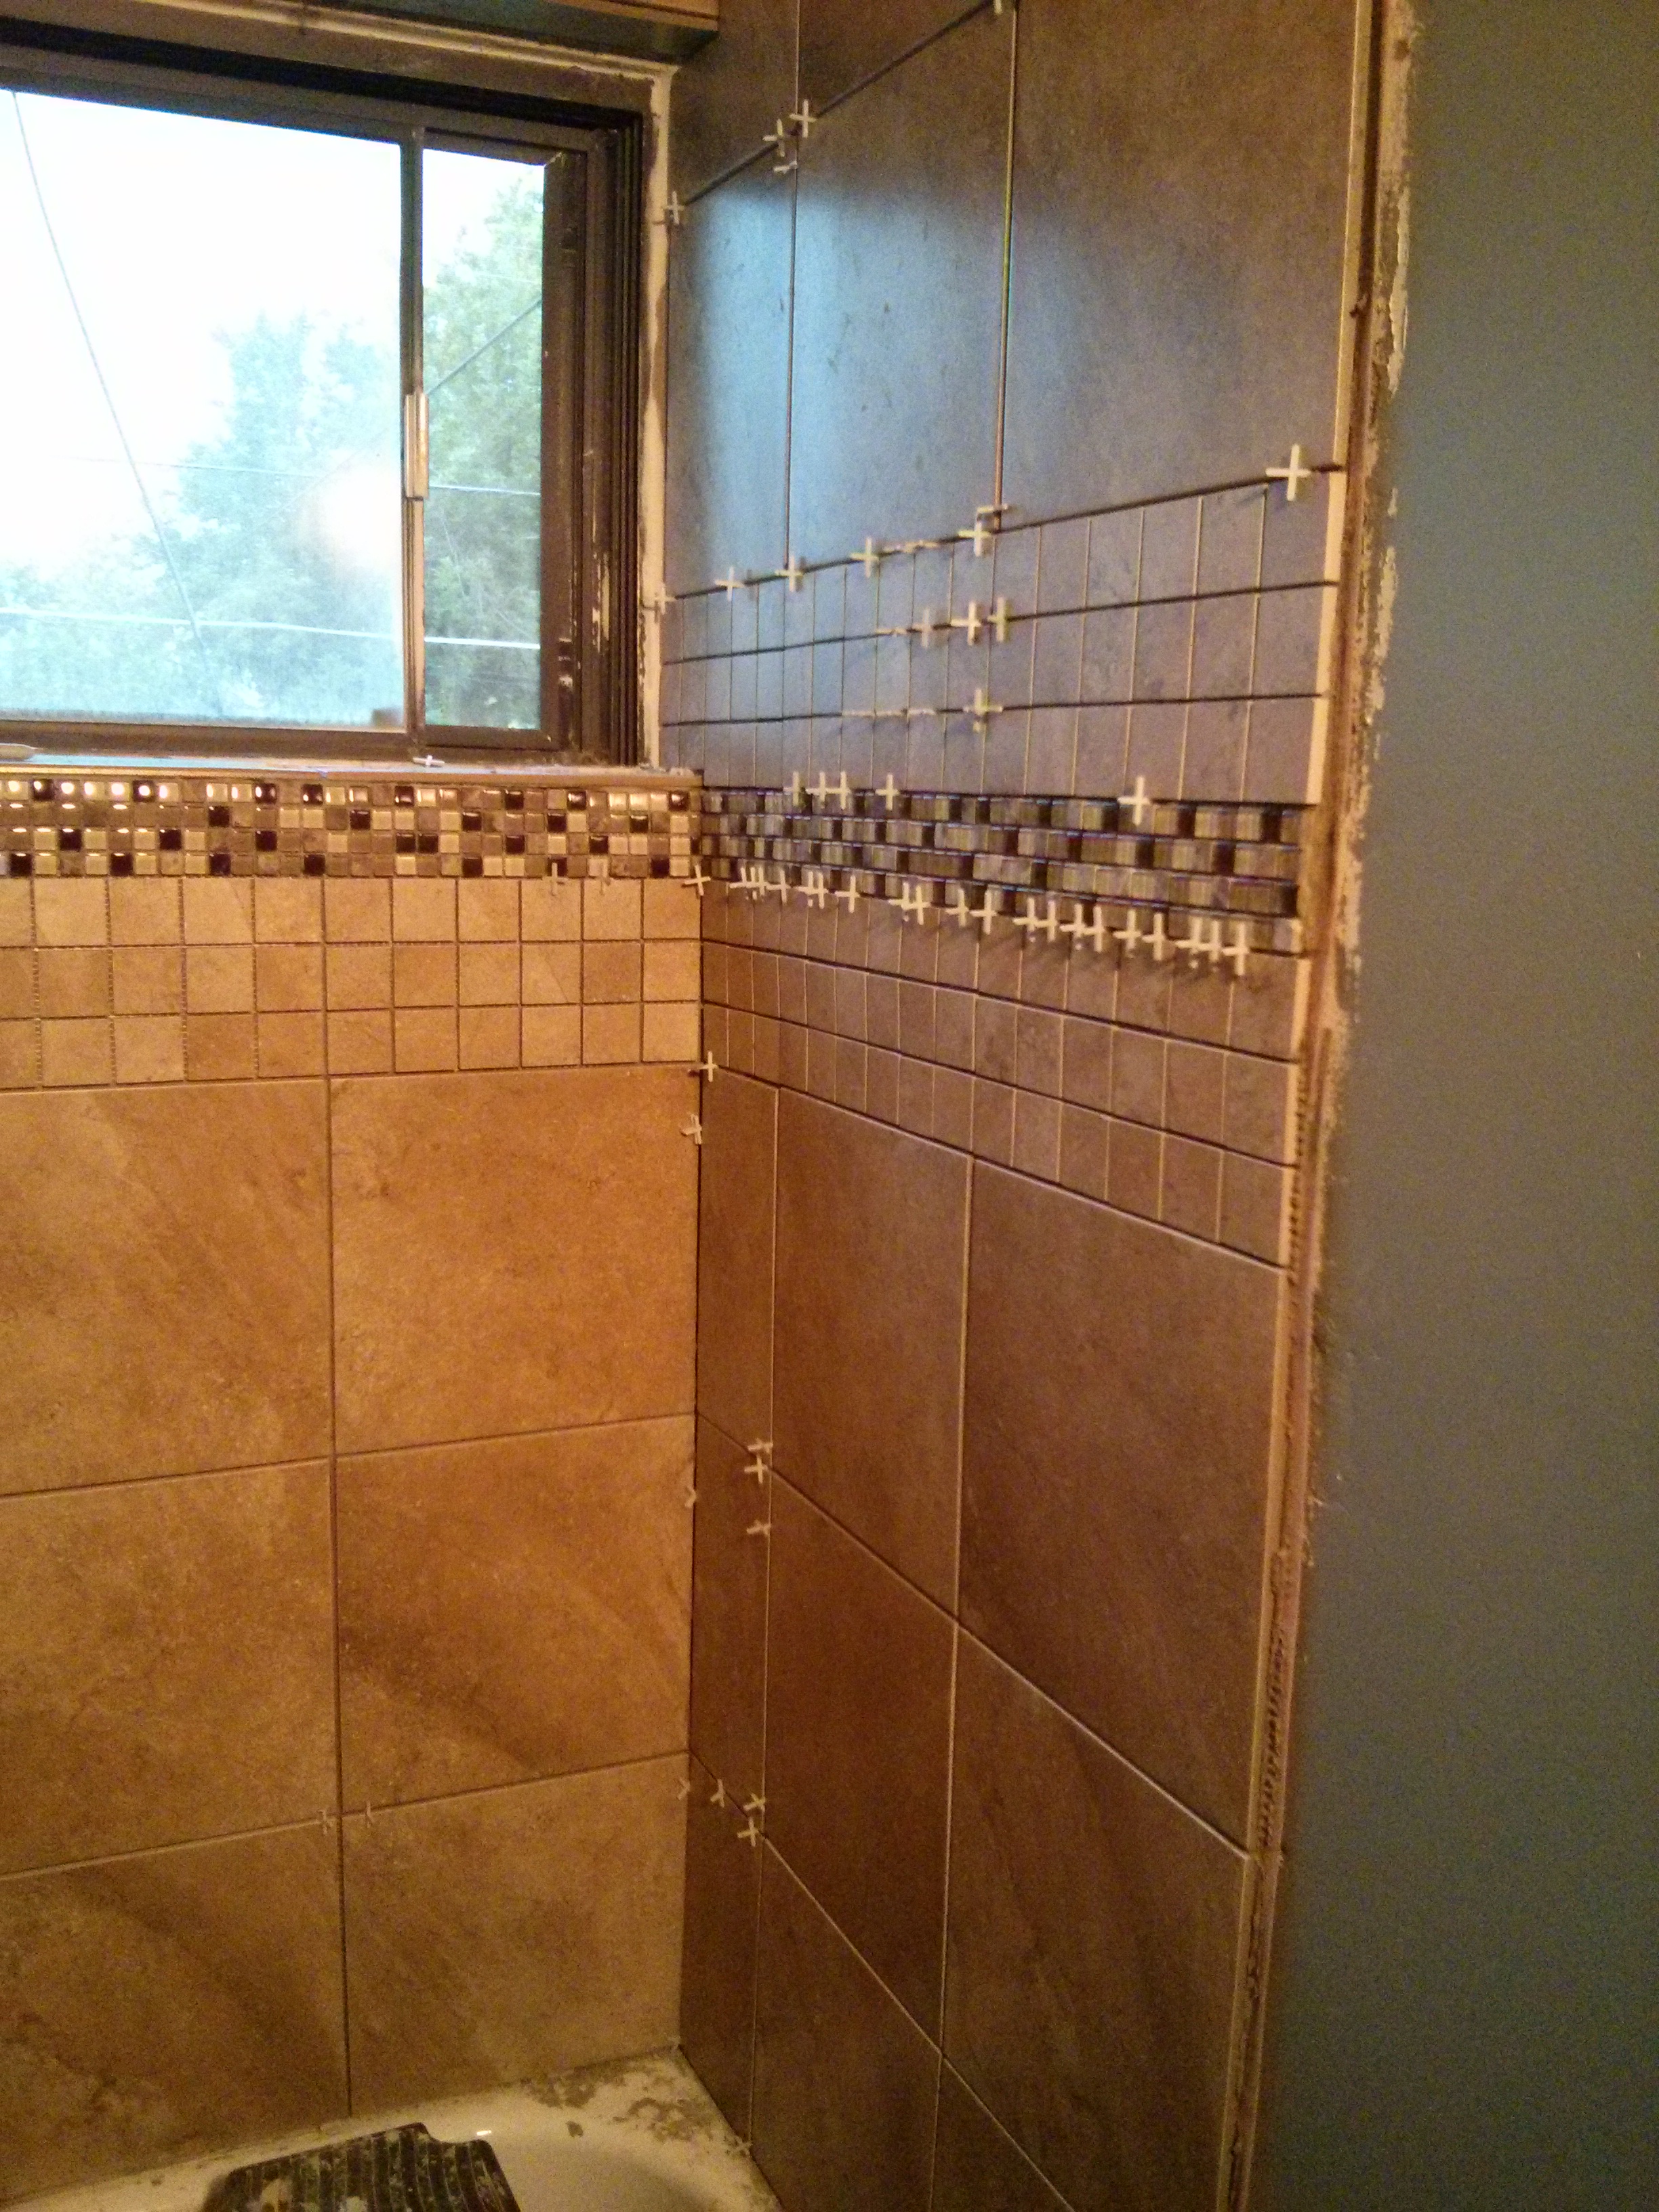 right side of shower tile